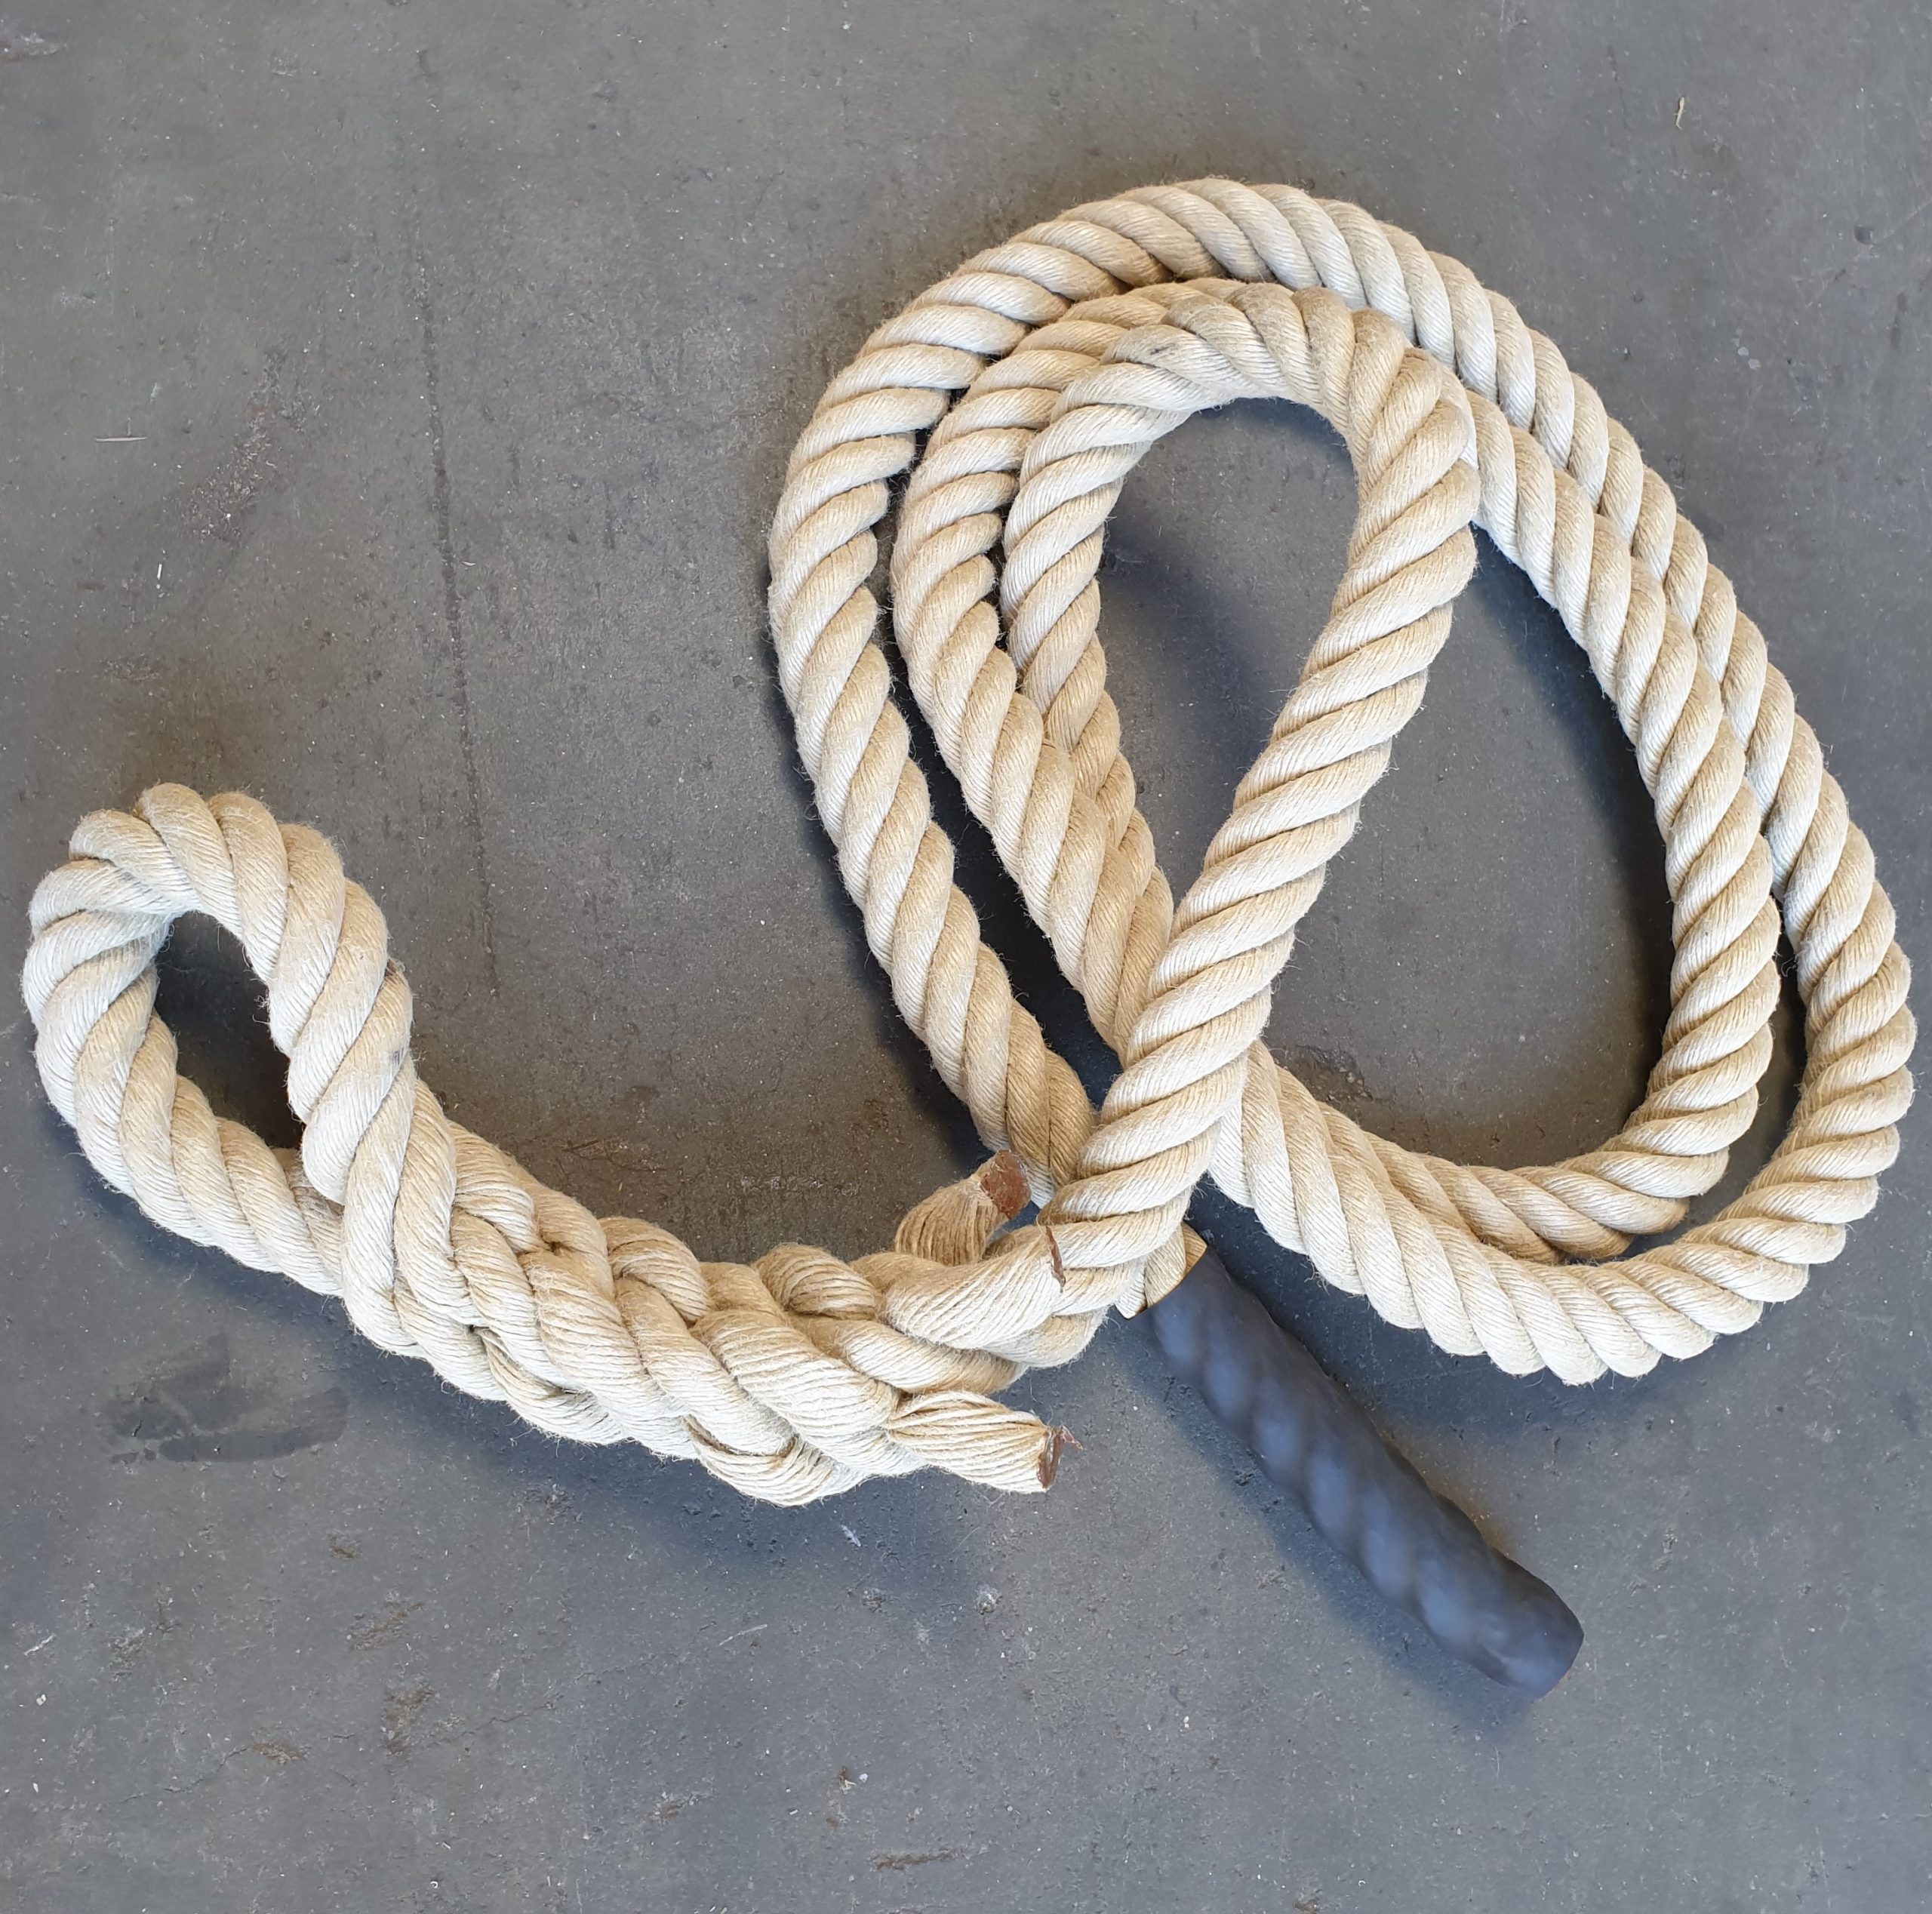 restjes De helling MonkeyXLKlimtouw 35mm - MonkeyXL - climbing rope crossfit